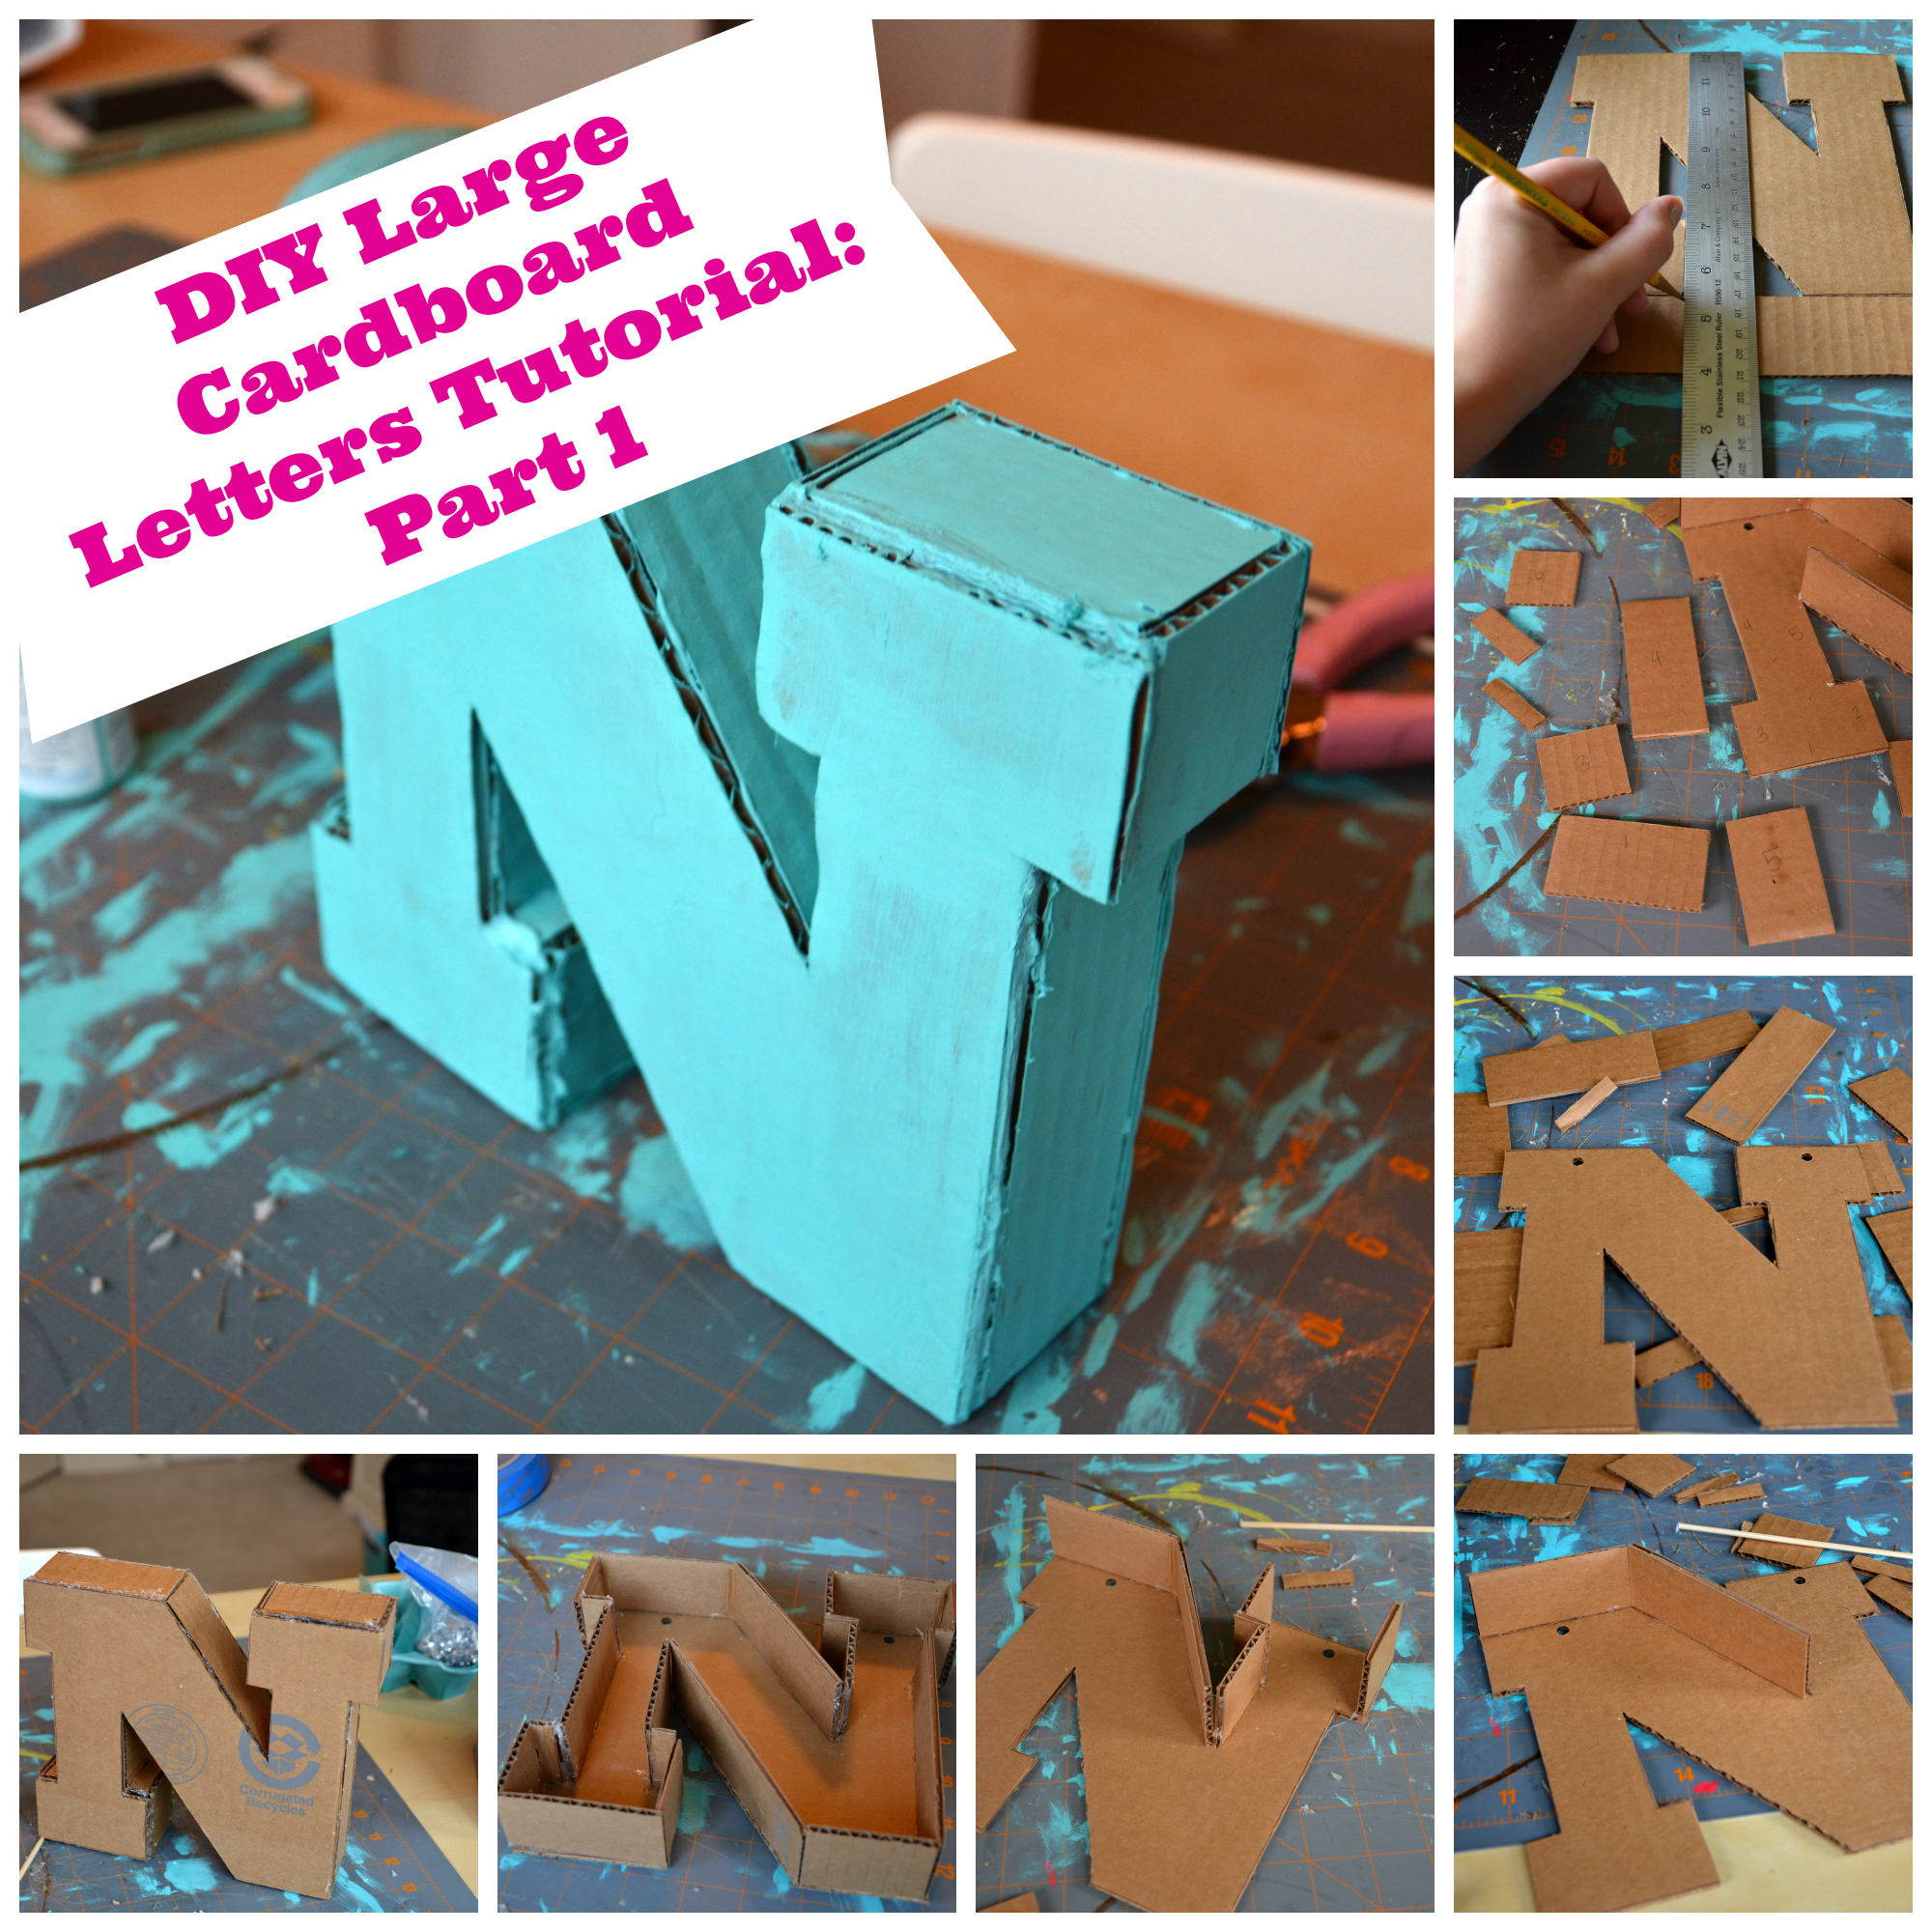 Customized Cardboard Letters DIY